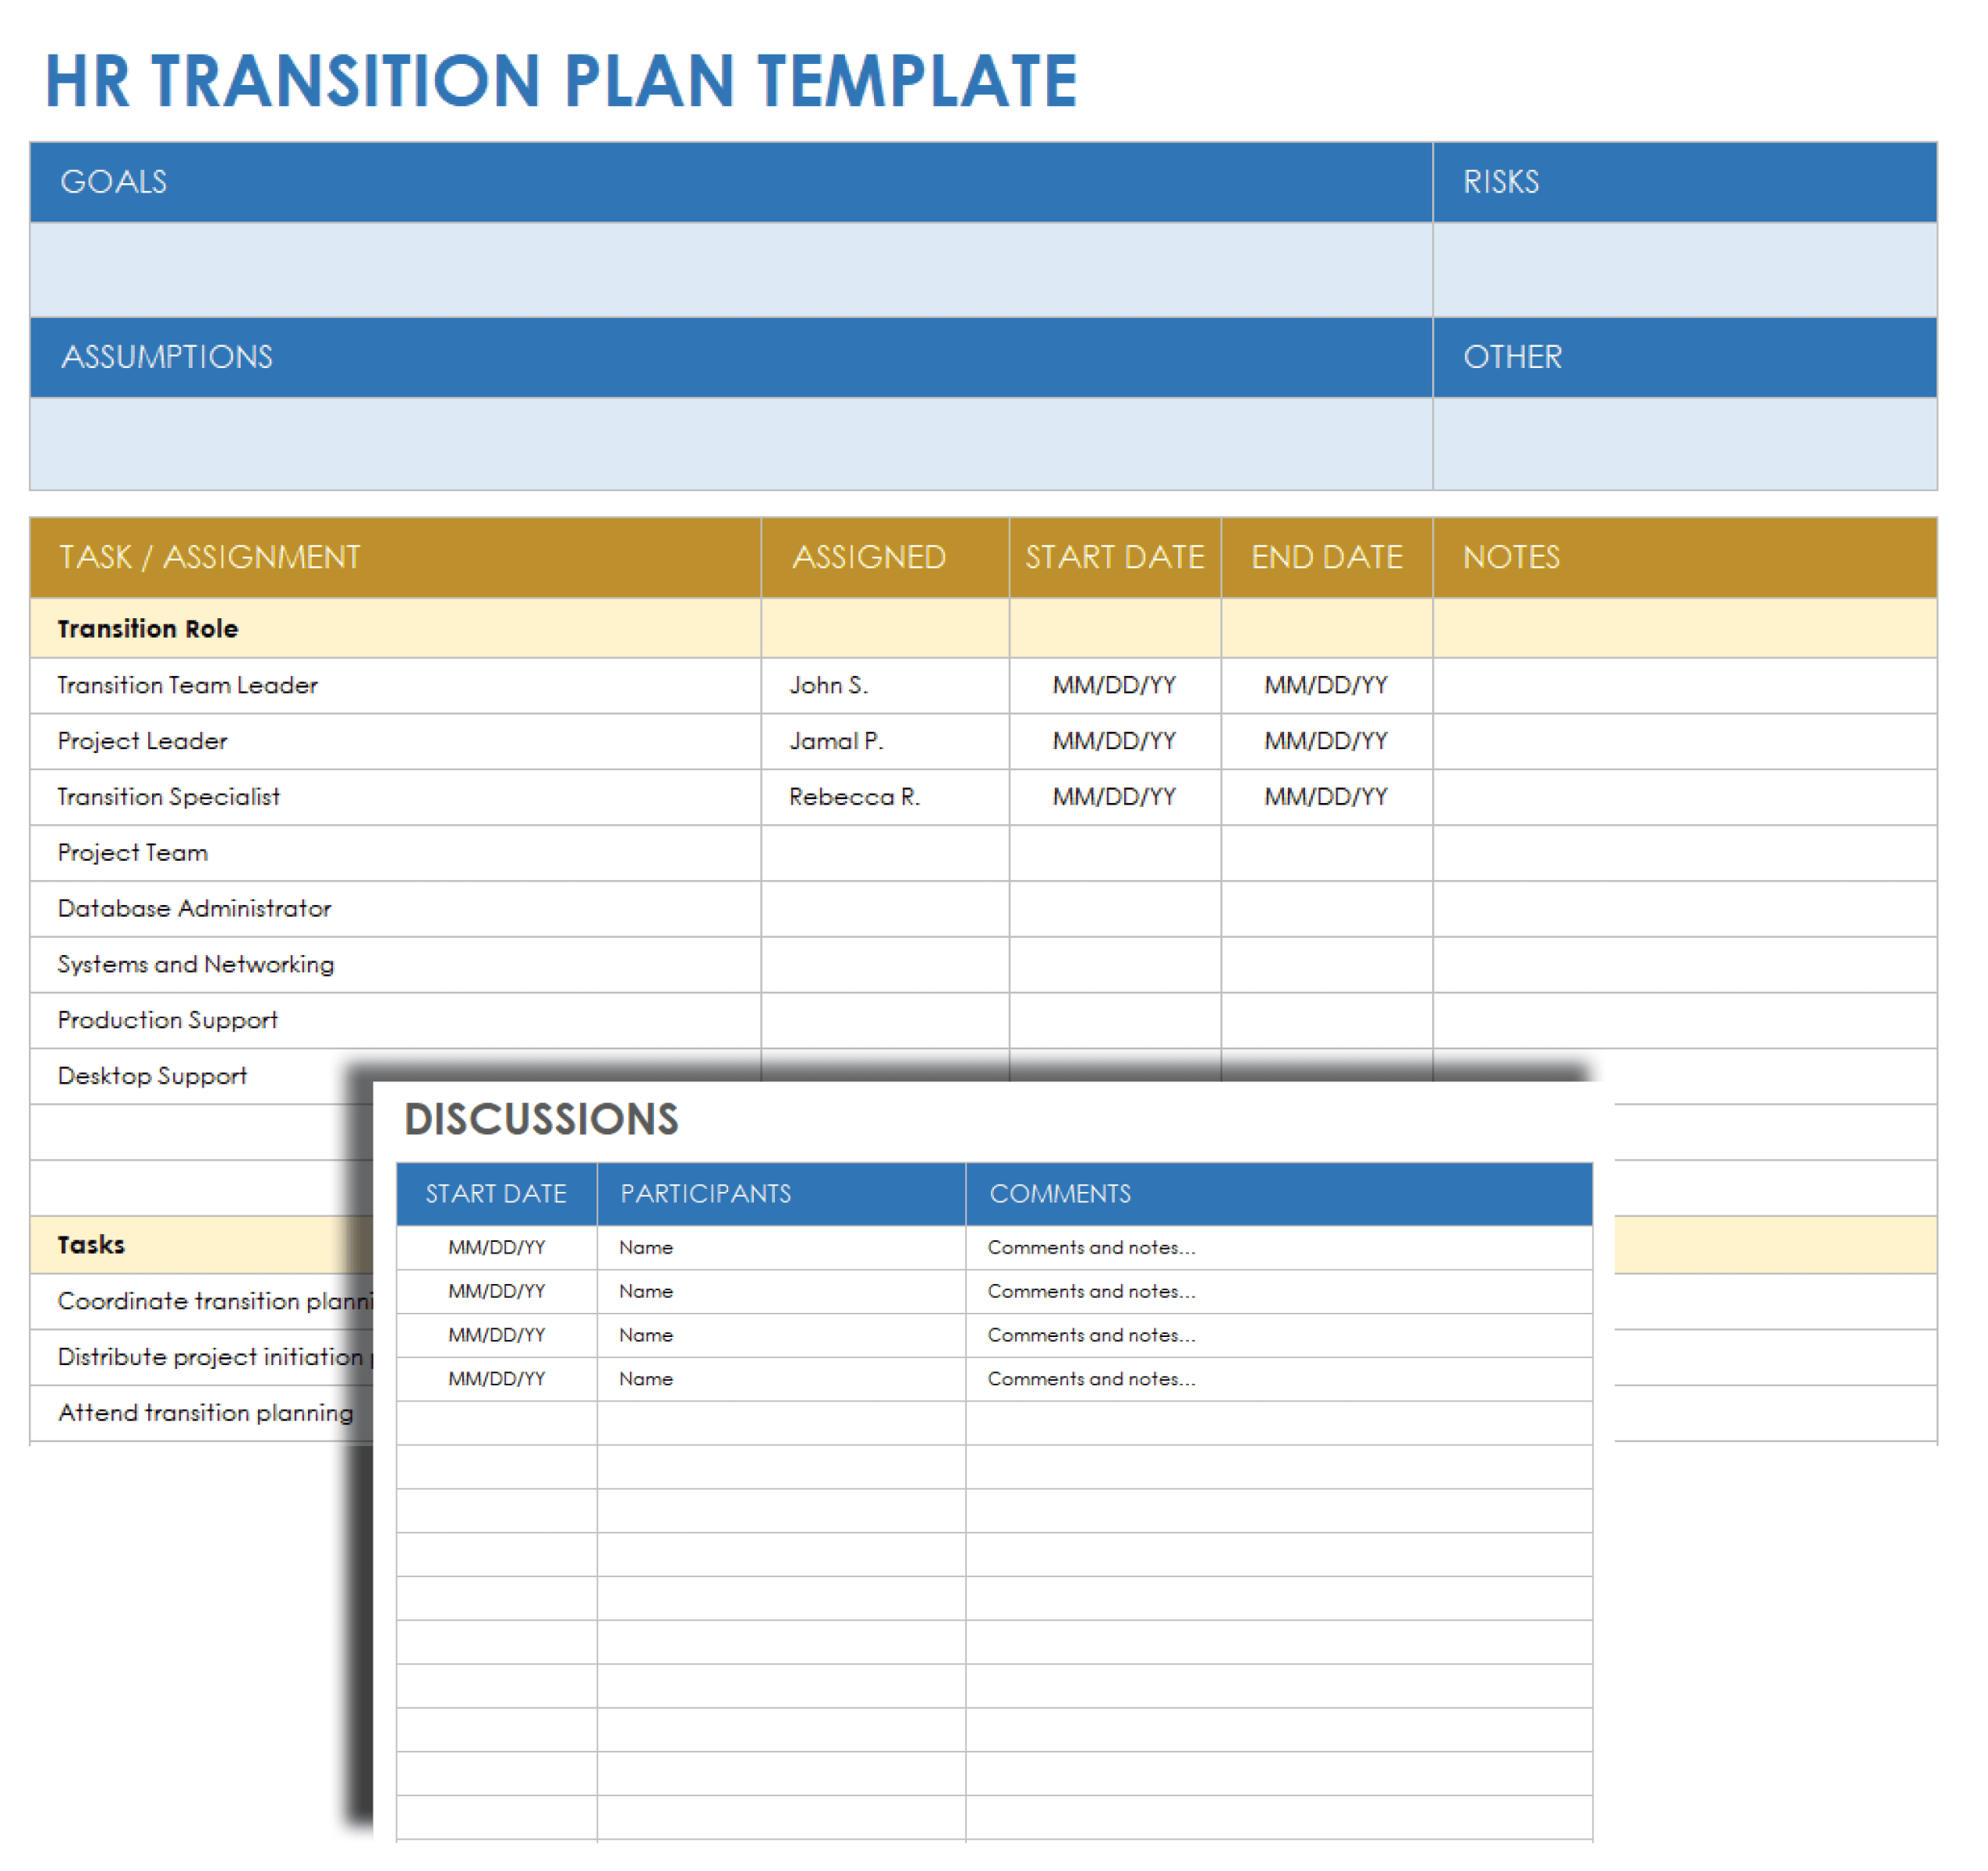 HR Transition Plan Template